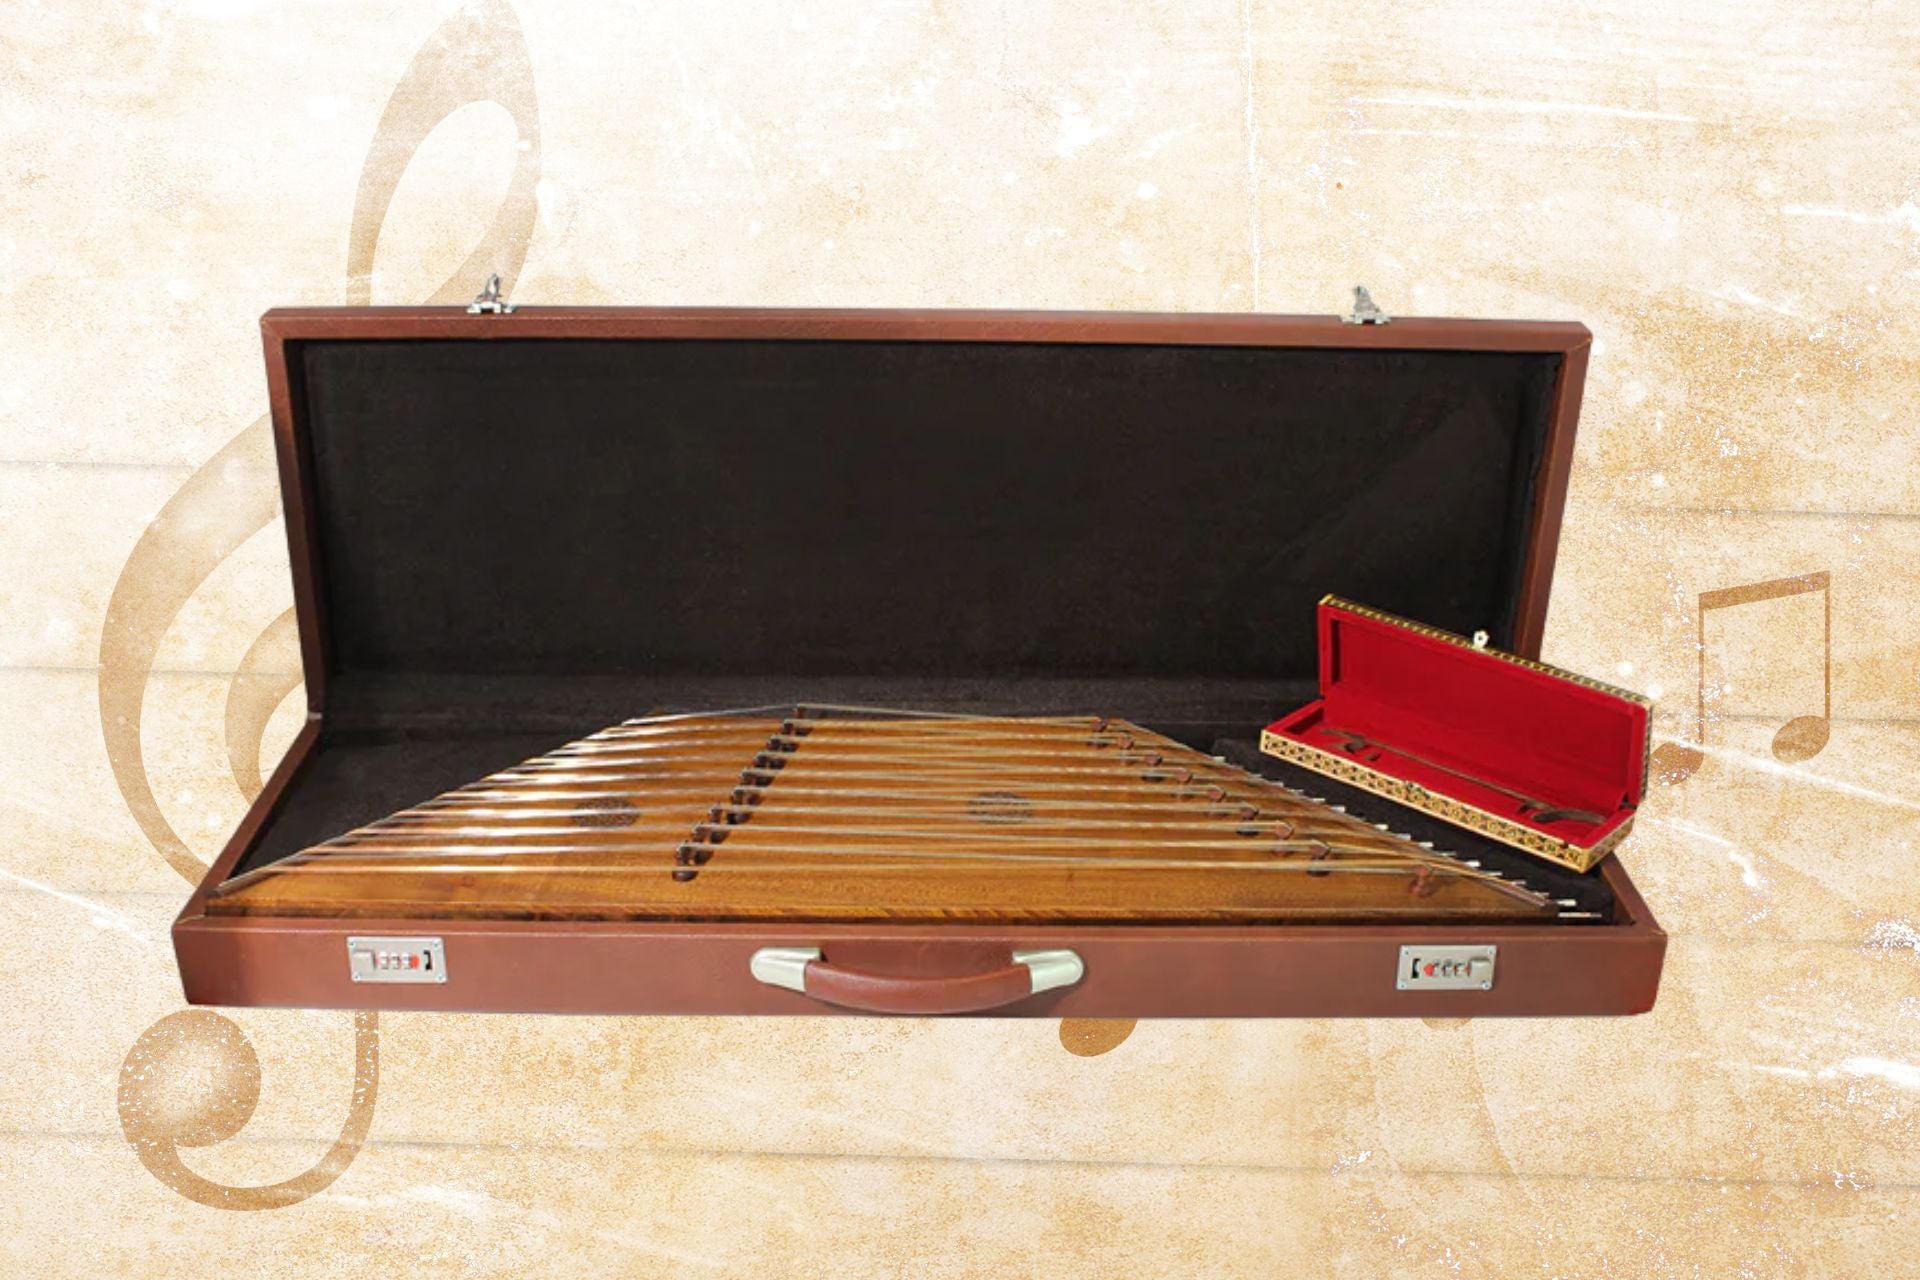 Santur: The Mesmerizing Persian Musical Instrument